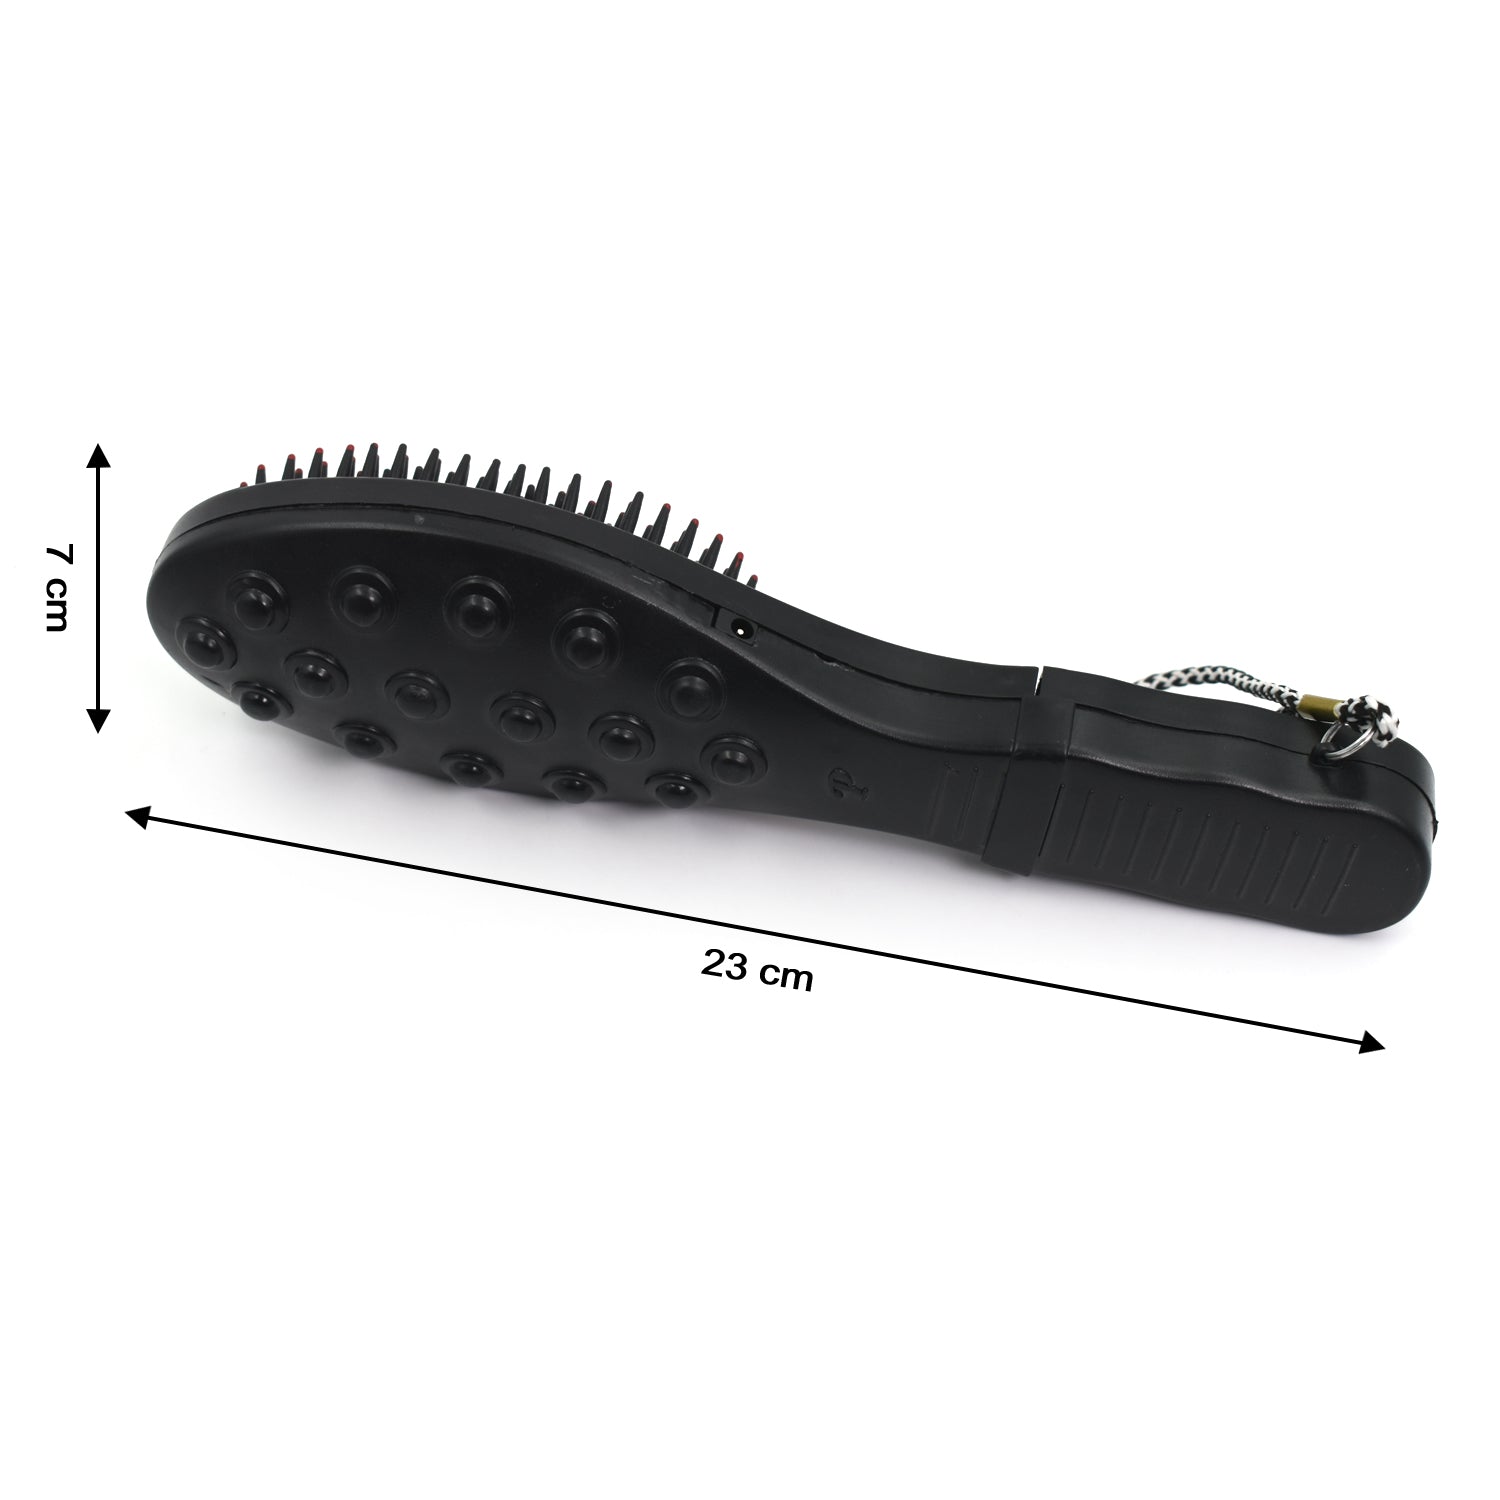 6174 Electric Vibrating Massager Comb Hair Brush Comb massager